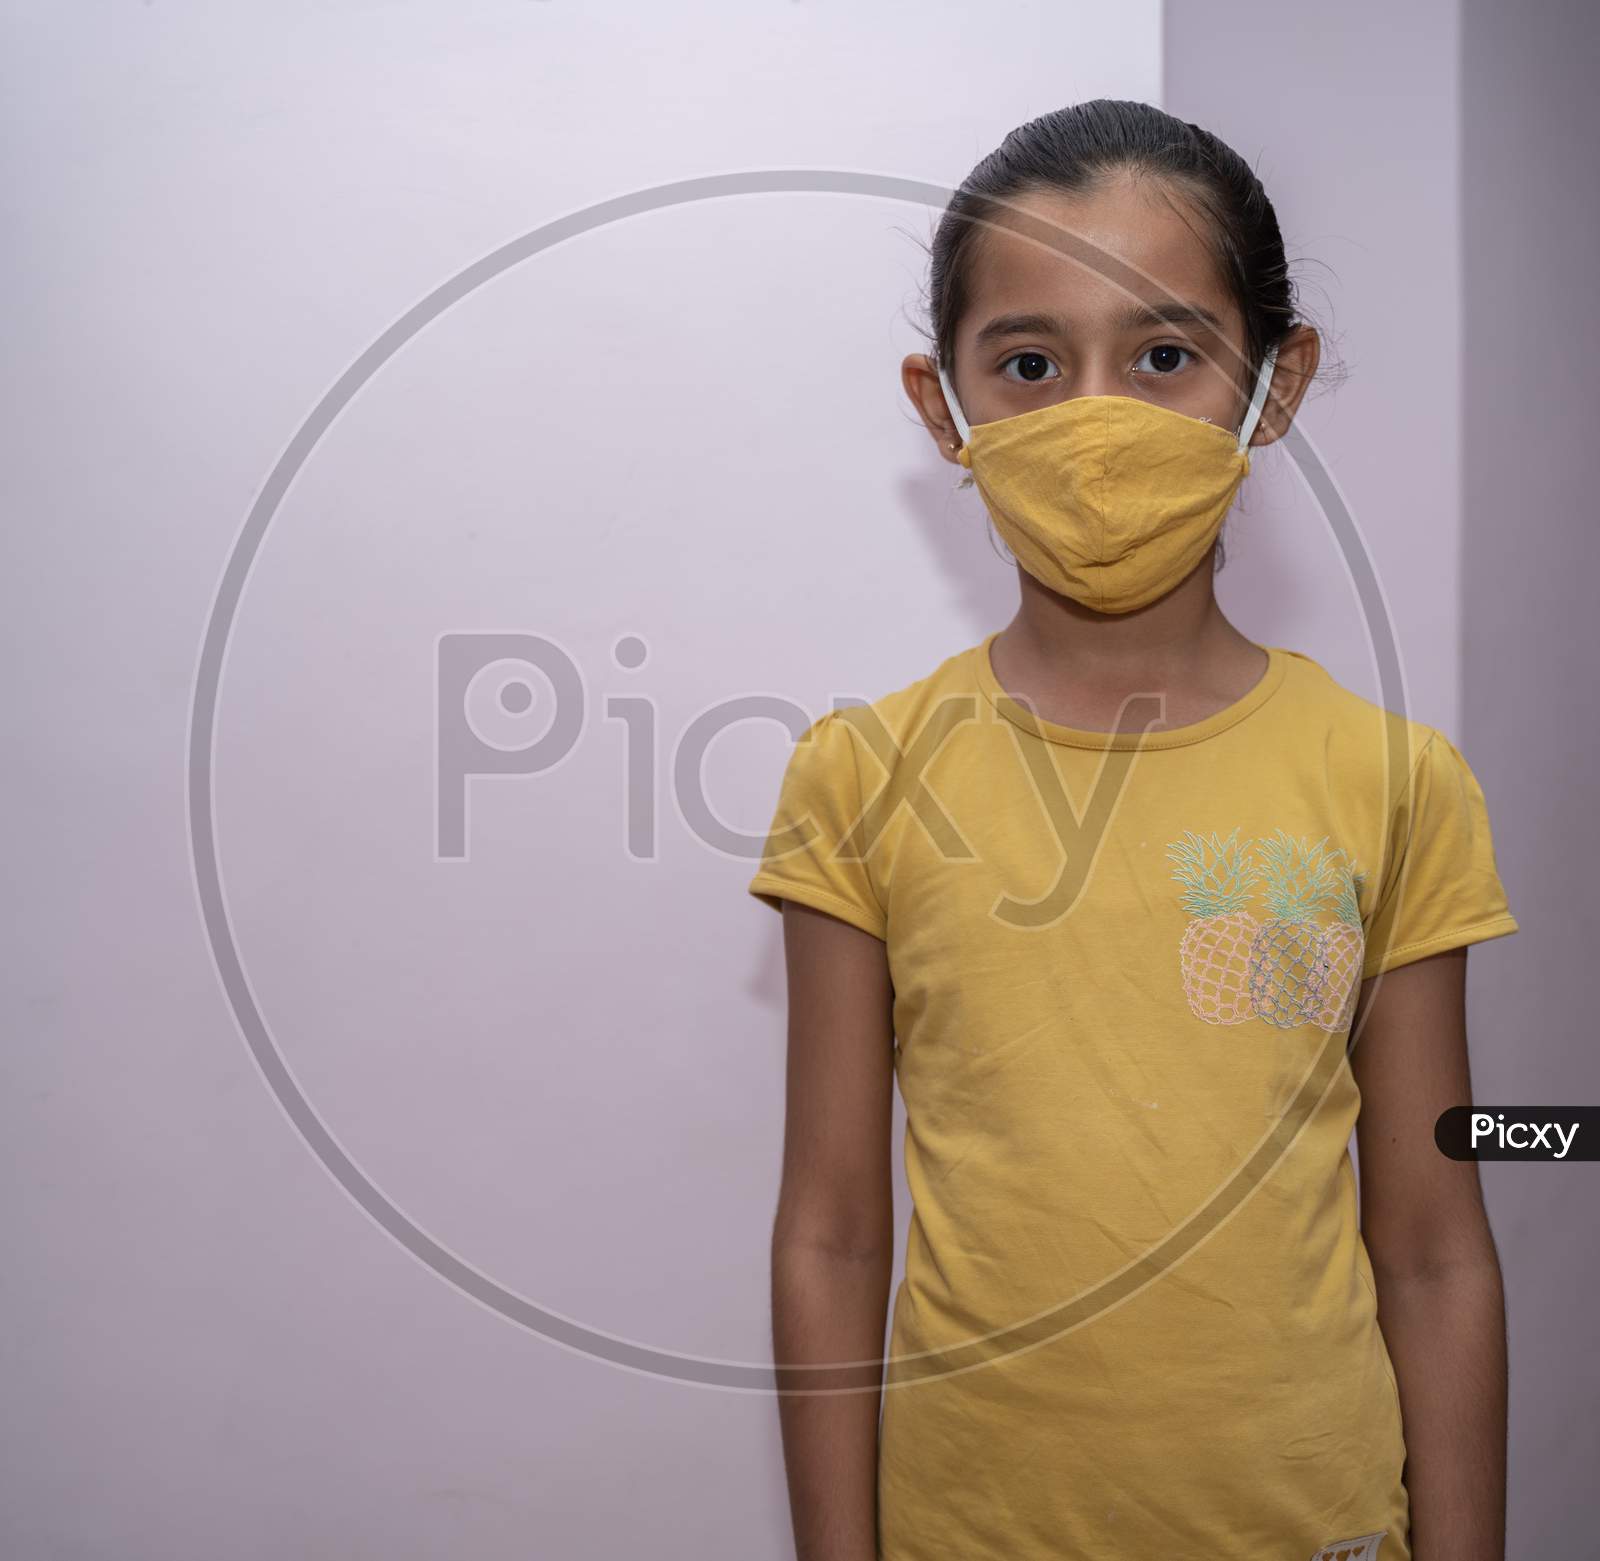 jaipur . Rajasthan . India - June 12, 2020. Asian girl wearing protective face mask Protect from the corona virus or Coronavirus covid-19